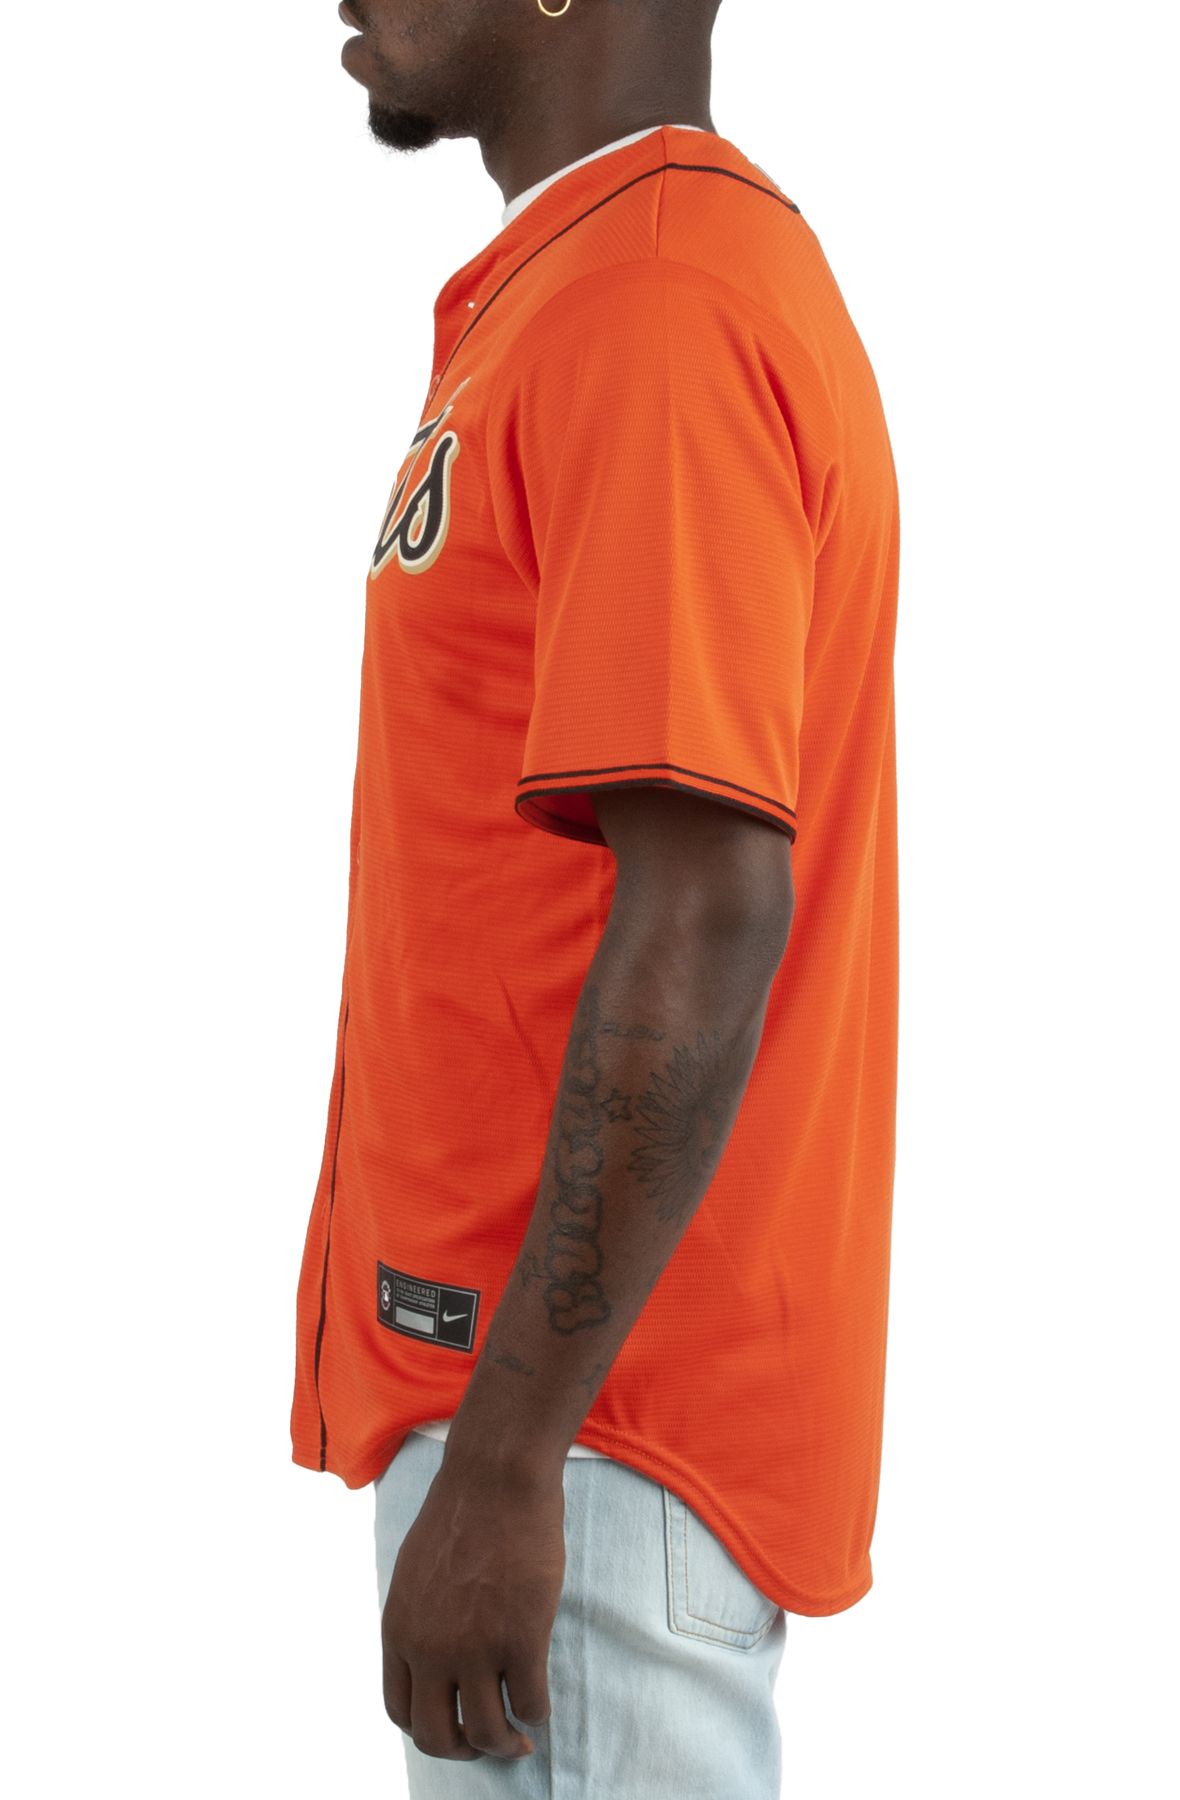 San Francisco Giants Nike Alternate Replica Team Jersey - Orange